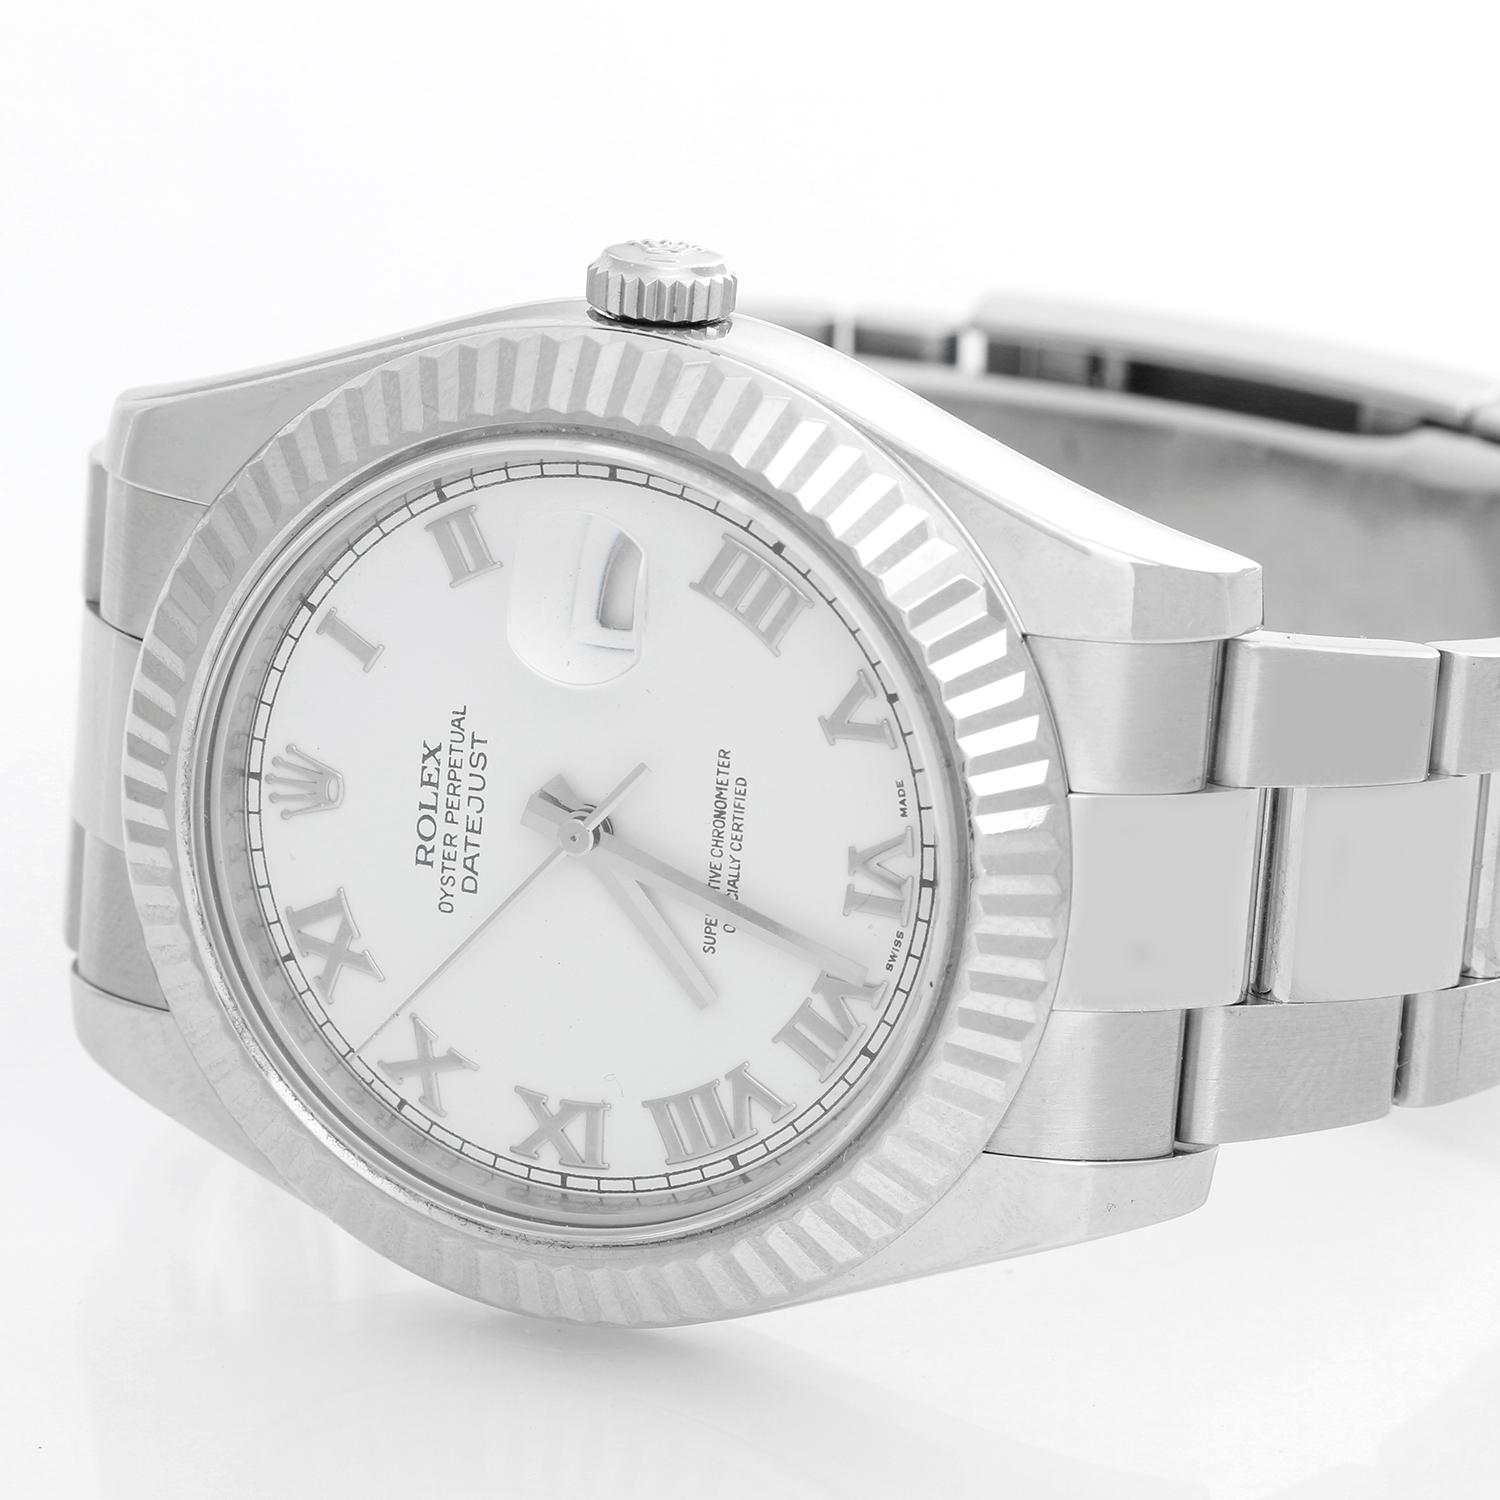 Rolex Datejust II Men's Stainless Steel Watch 116334 1